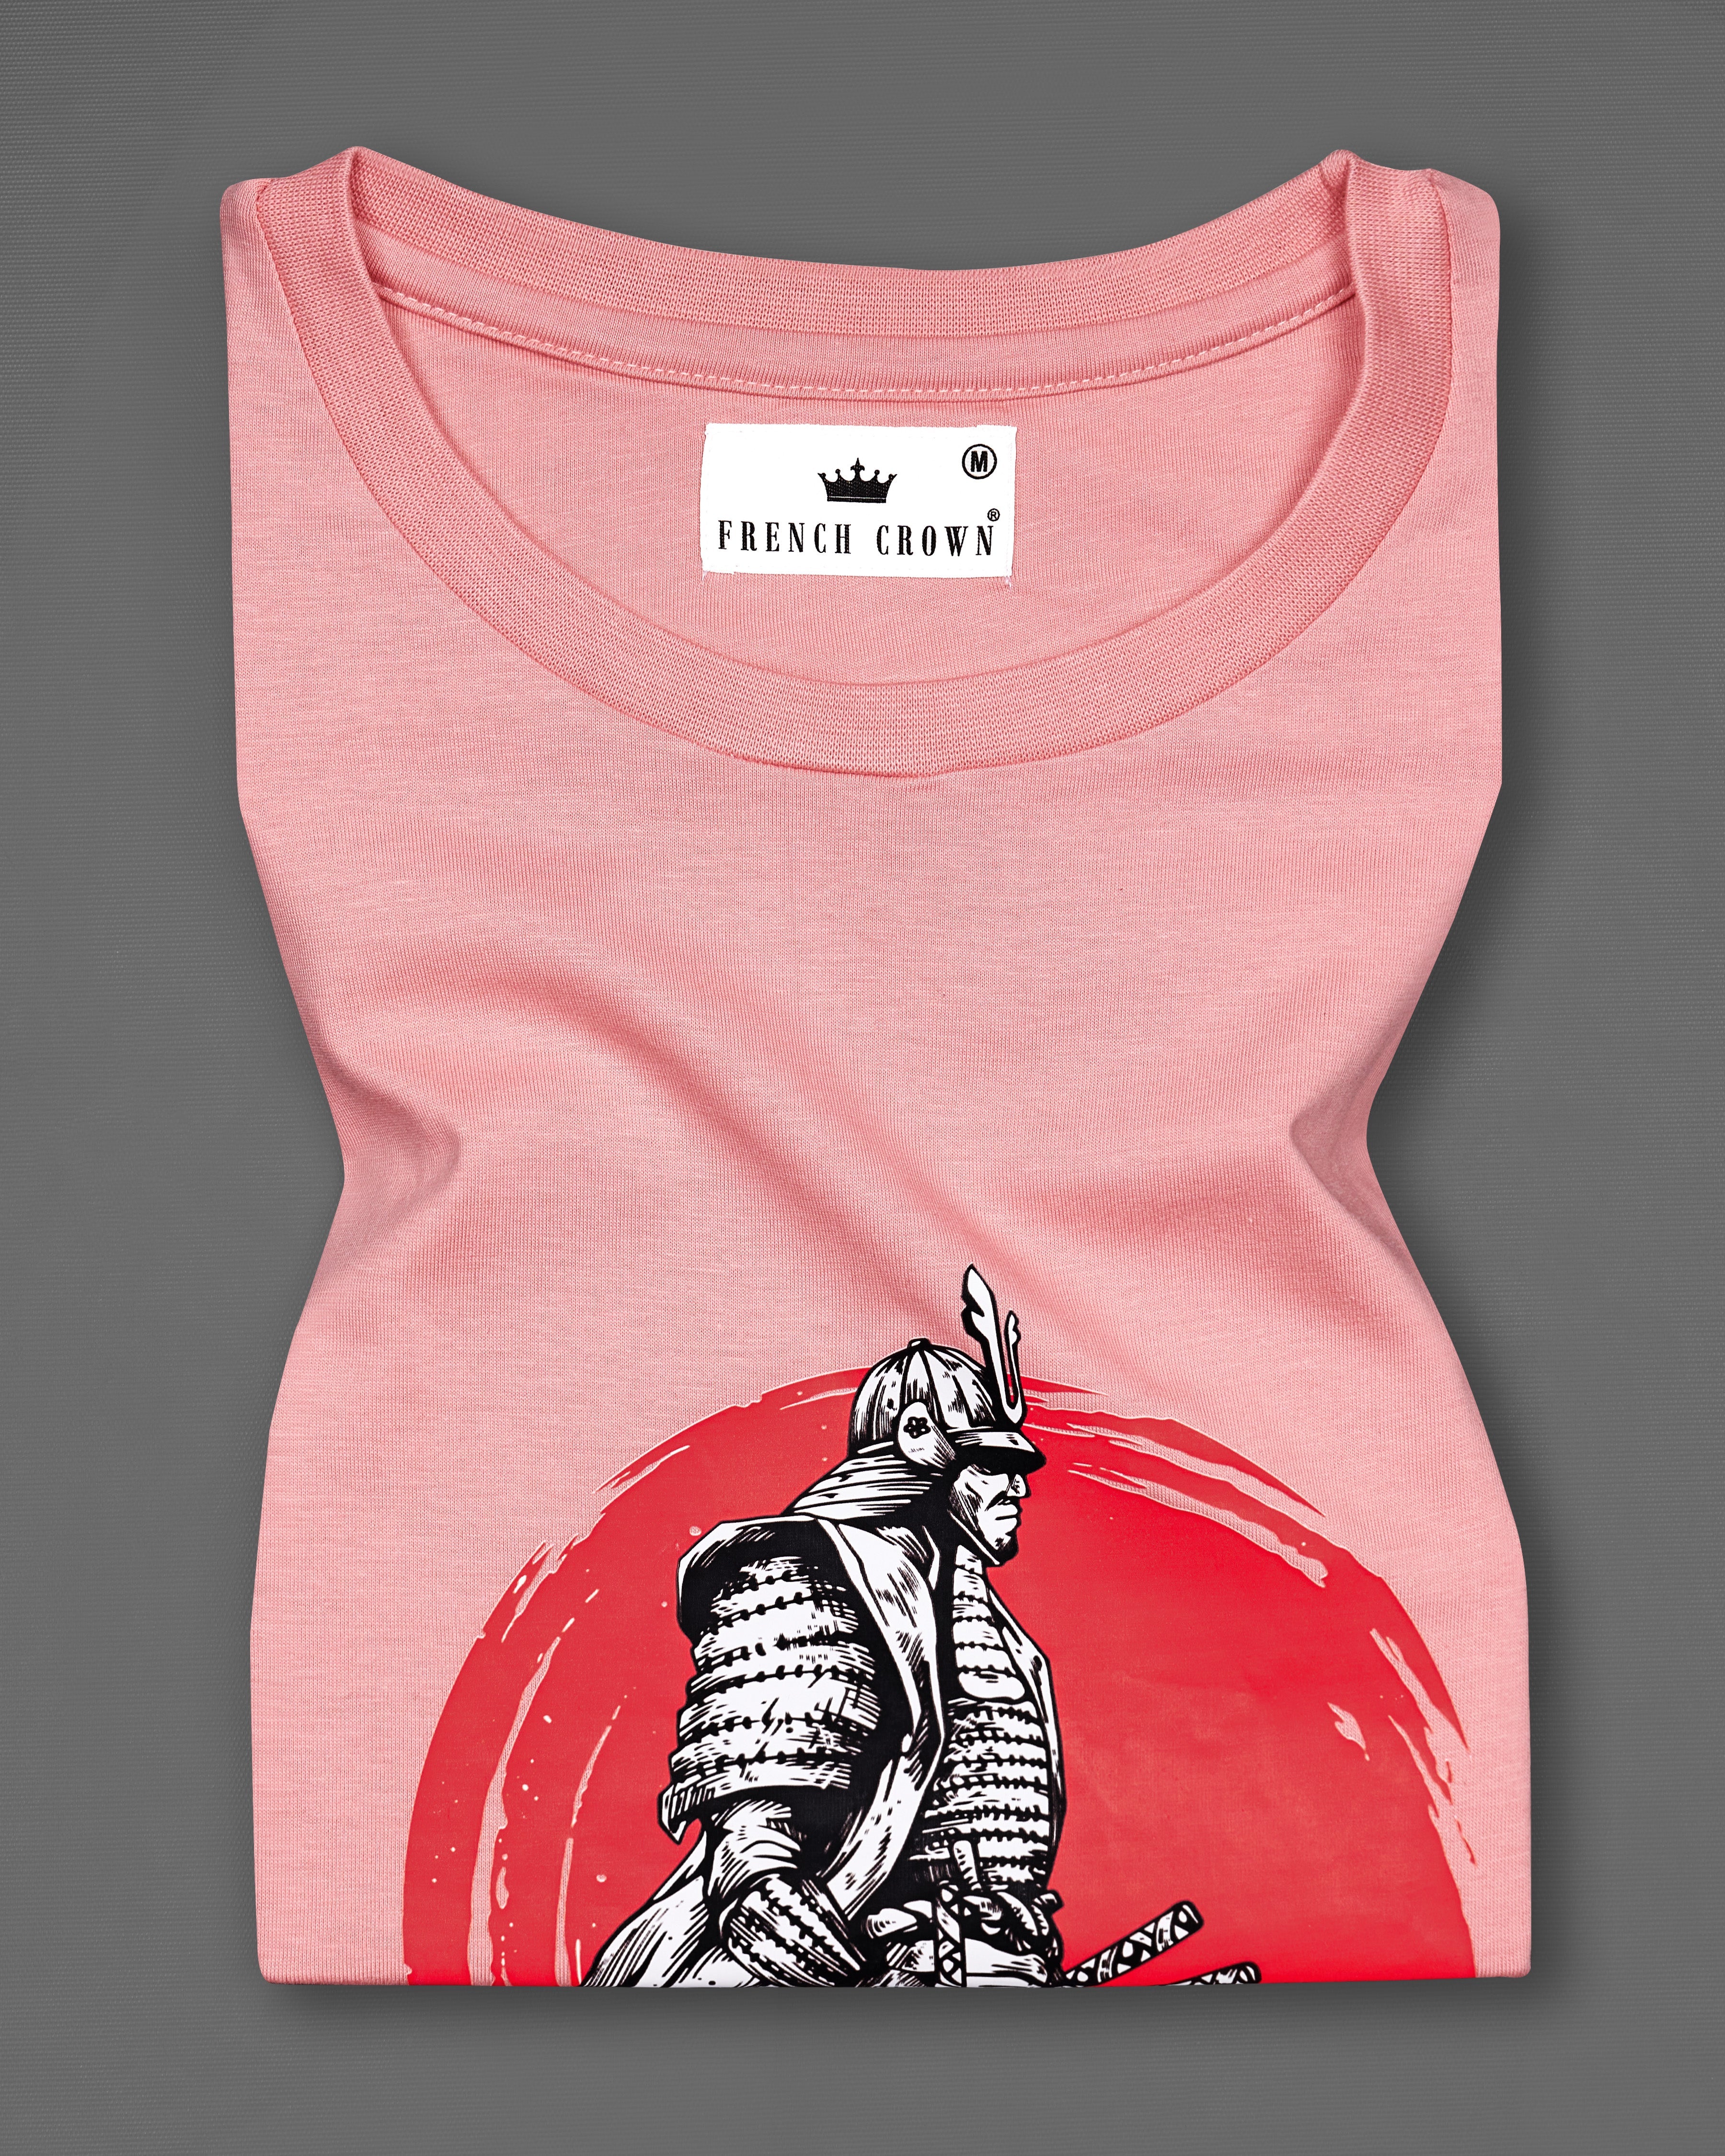 Chestnut Pink Digital Printed Organic Cotton T-shirt TS072-W01-S, TS072-W01-M, TS072-W01-L, TS072-W01-XL, TS072-W01-XXL